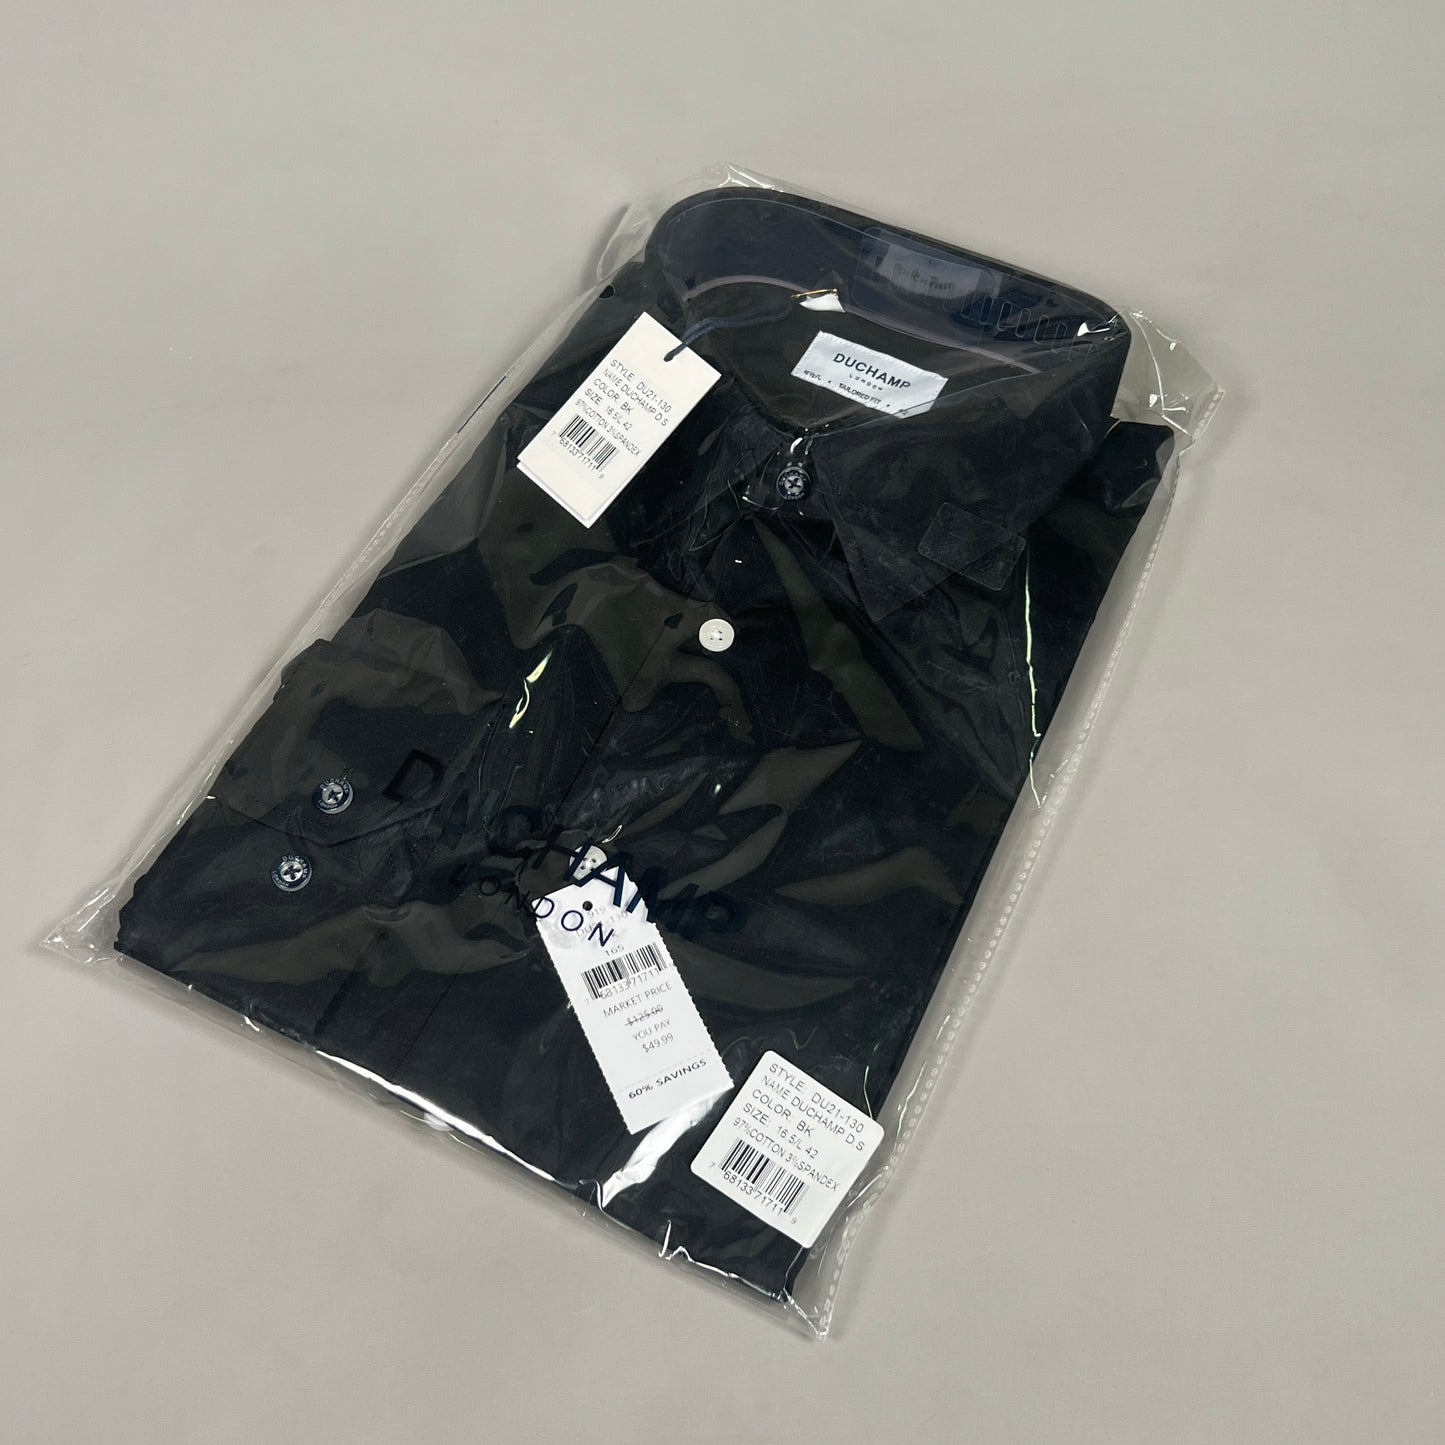 DUCHAMP LONDON Black Solid Tailored-fit Dress Shirt Men's Sz L / 42 / 16.5 (New)